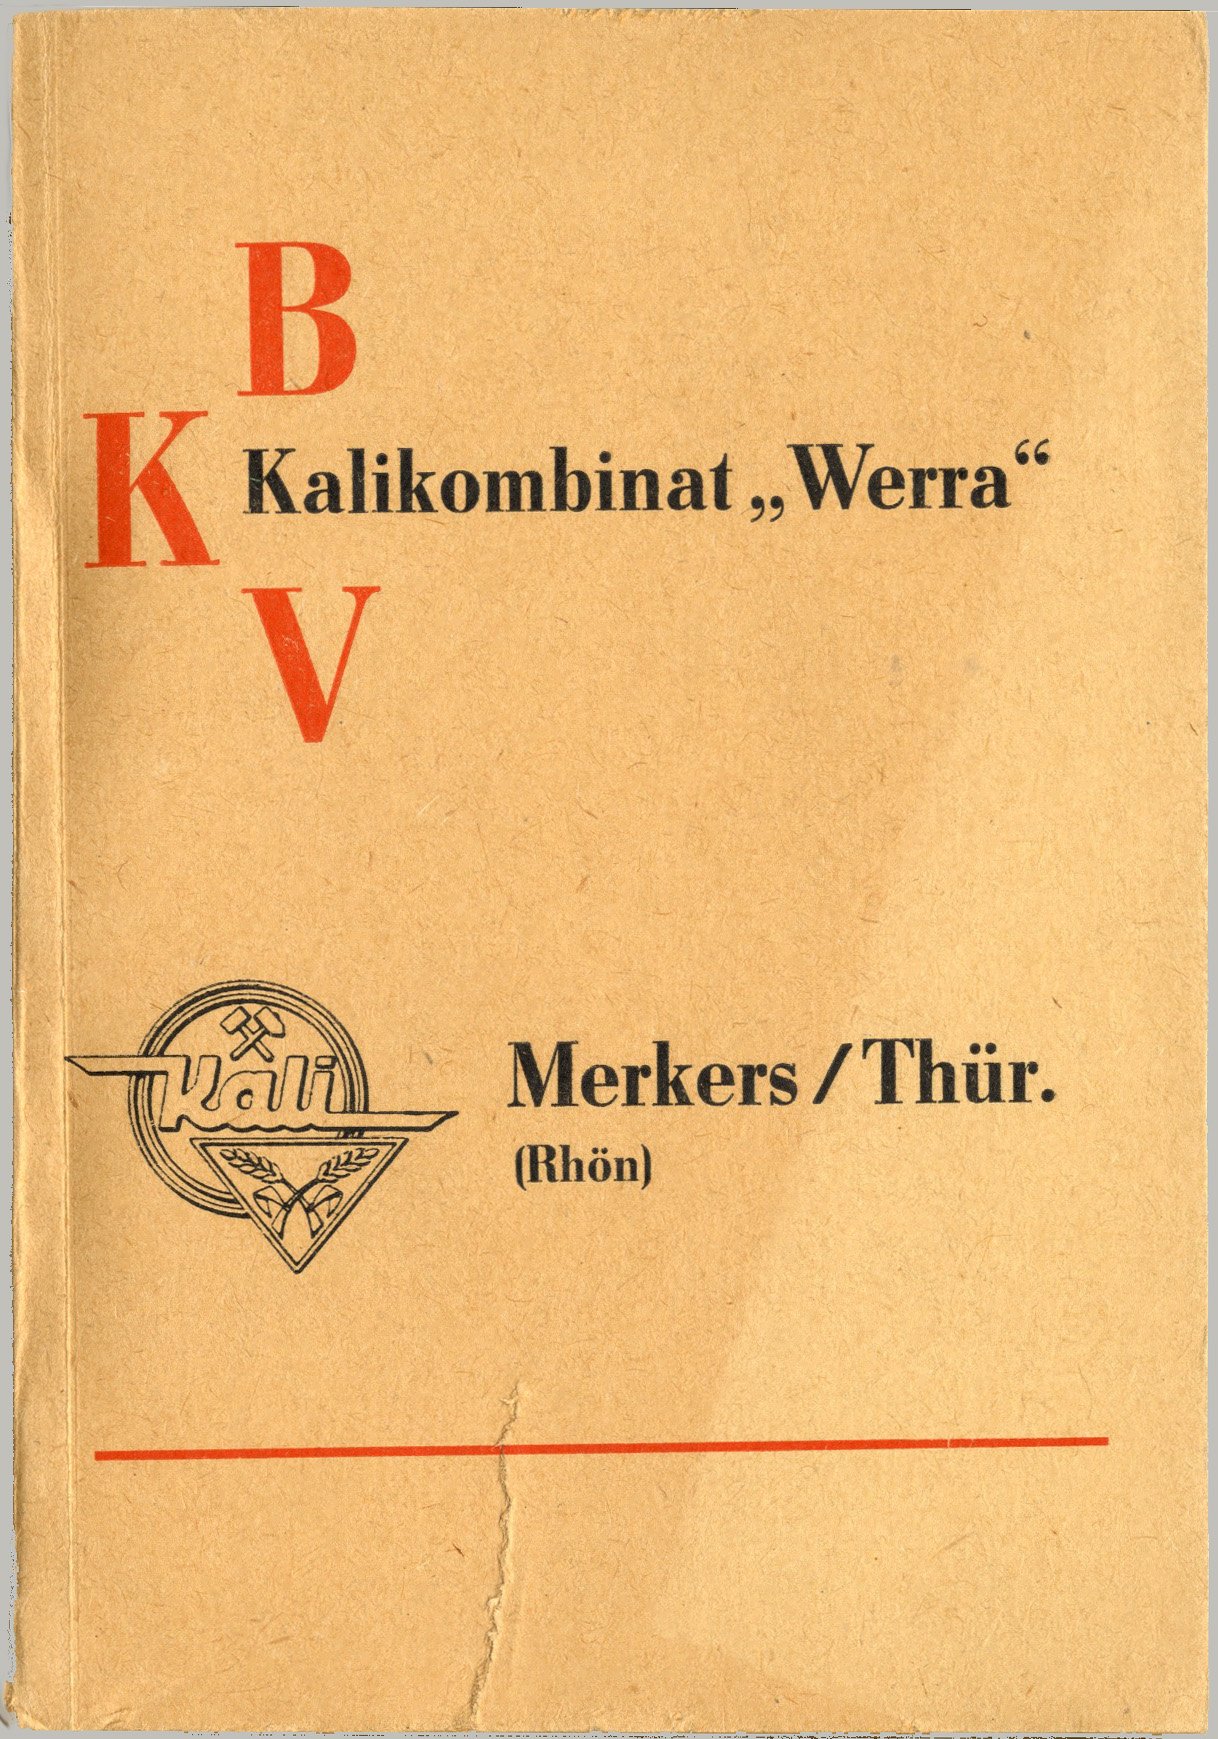 Betriebskollektivvertrag 1964 für das Kalikombinat "Werra" Merkers (Rhön) (Werra-Kalibergbau-Museum, Heringen/W. CC BY-NC-SA)